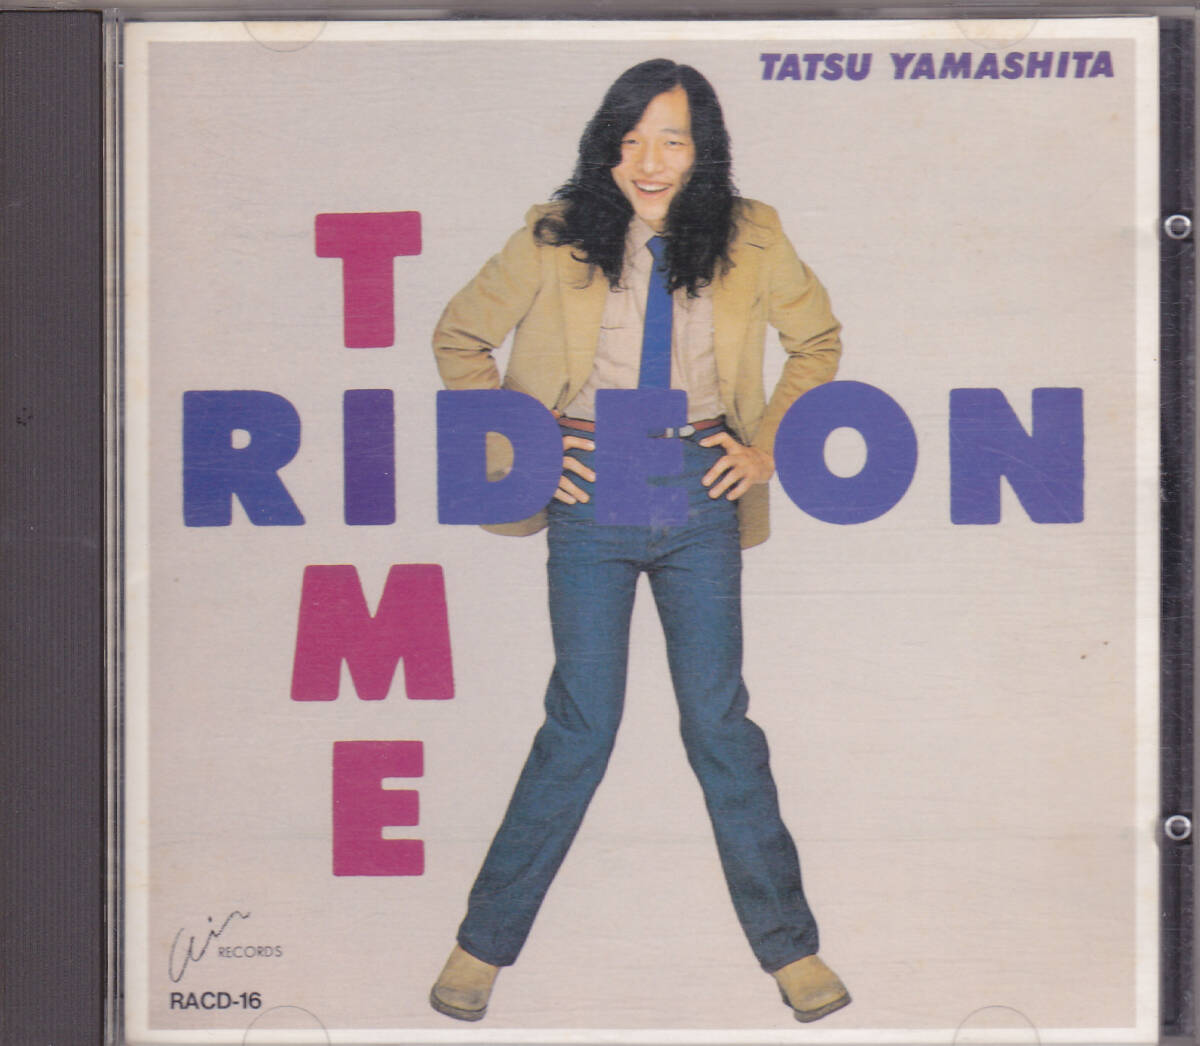 CD 山下達郎 - RIDE ON TIME ライドオンタイム - 旧規格 RACD-16 A 3A12 3800円盤 税表記なし RVC 初期盤_画像1